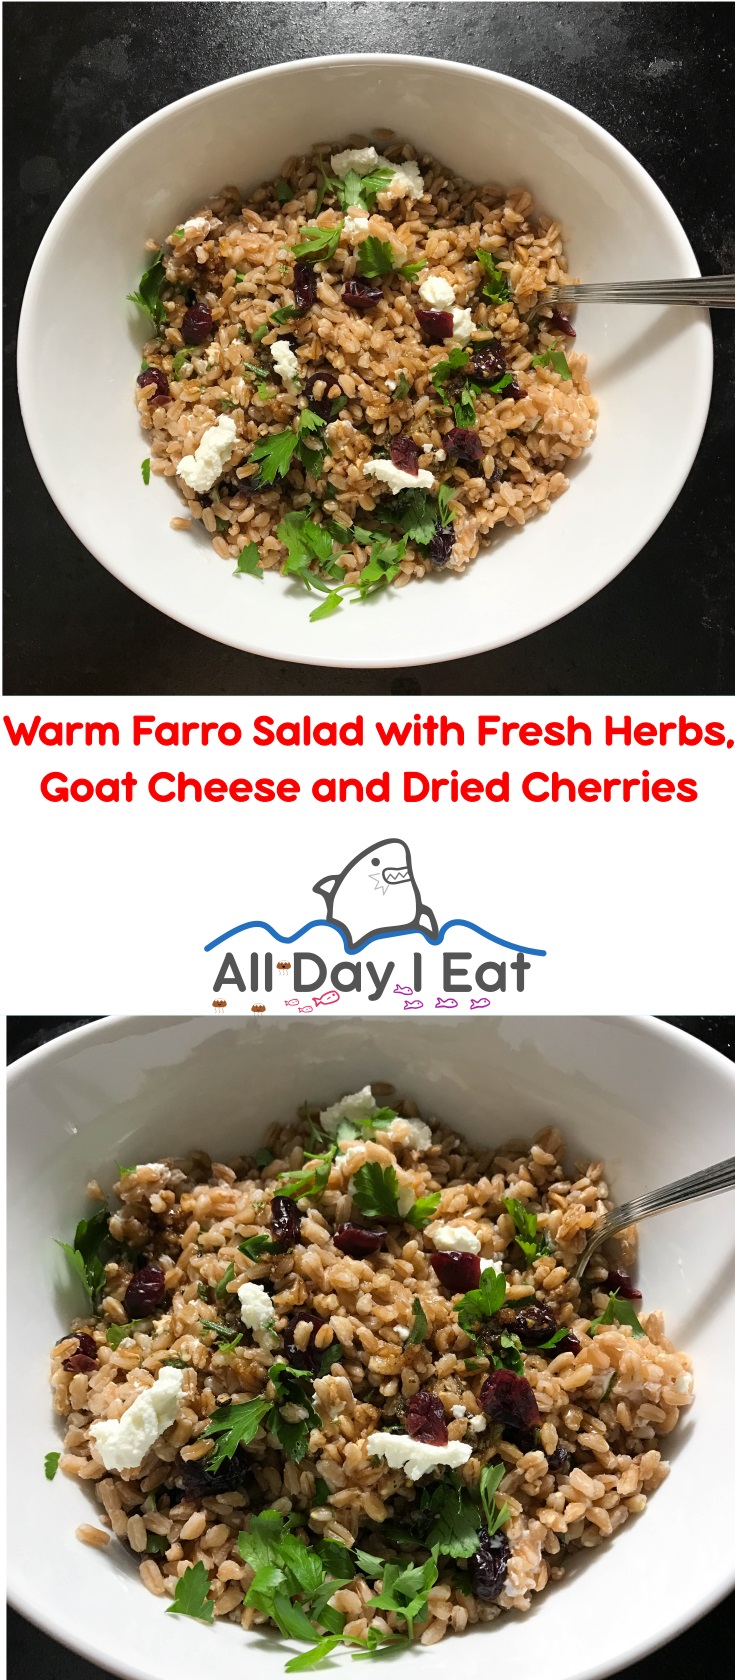 Warm Farro Salad with Fresh Herbs, Goat Cheese and Dried Cherries | www.alldayieat.com